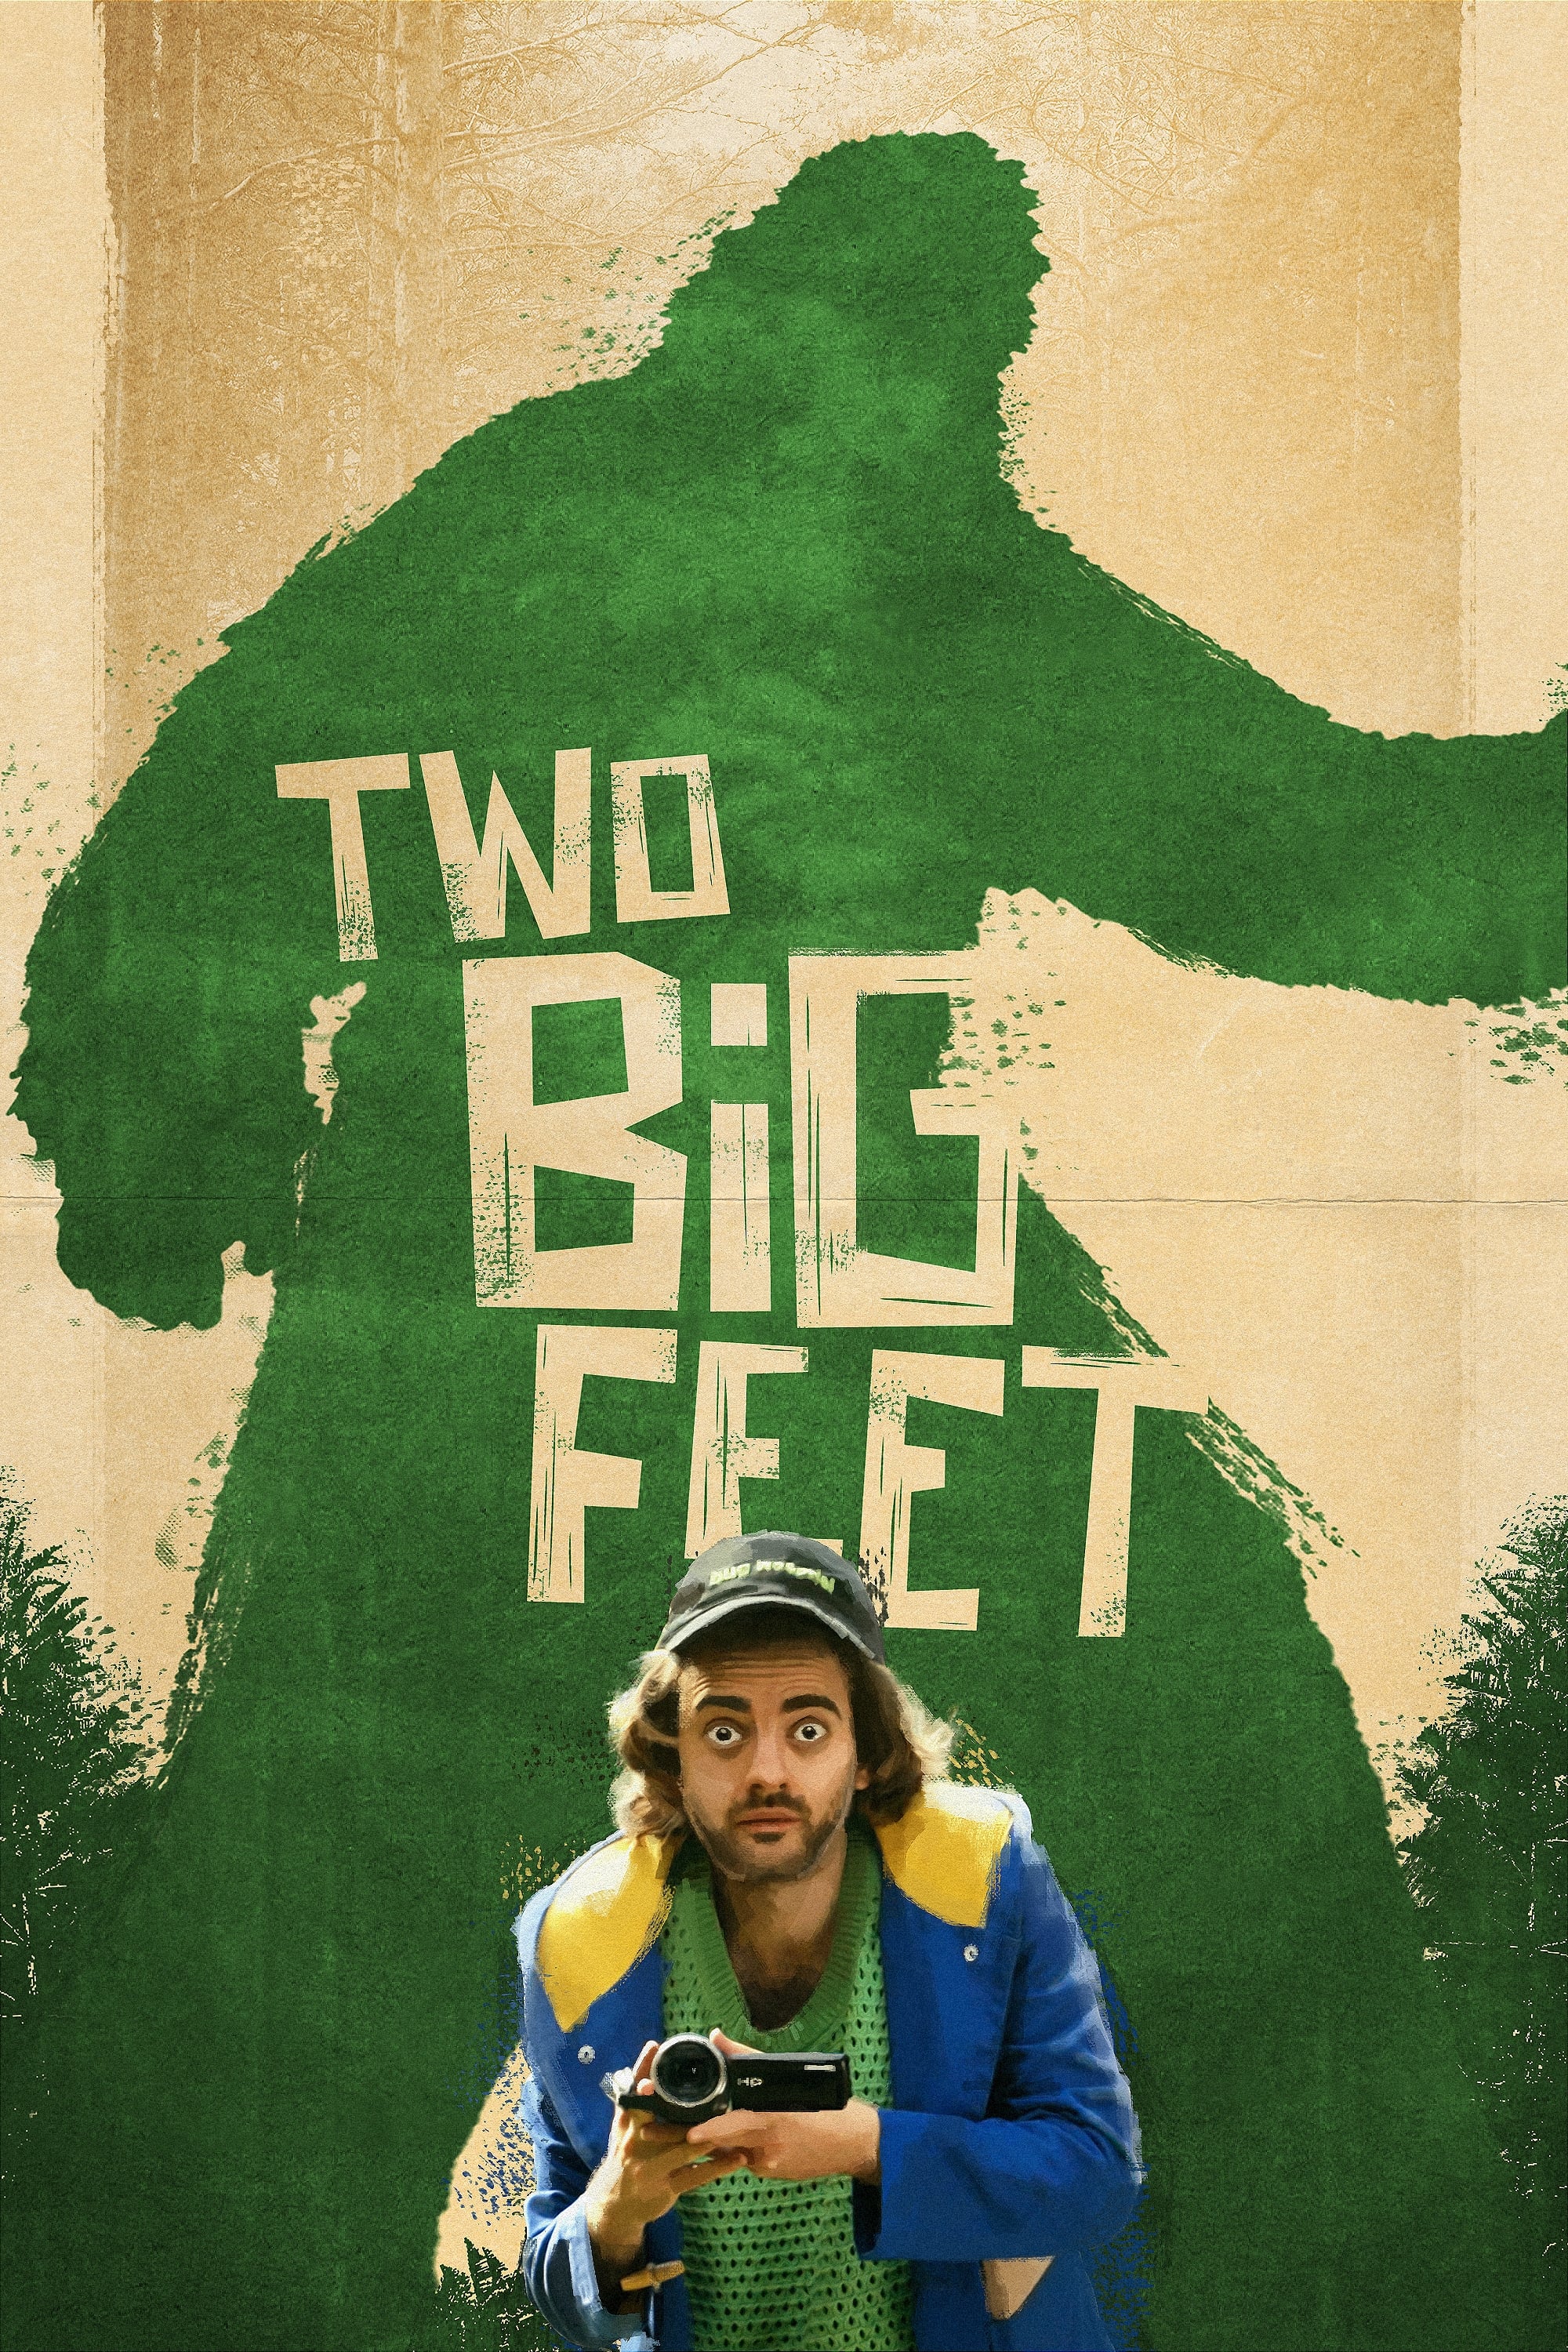 Two Big Feet